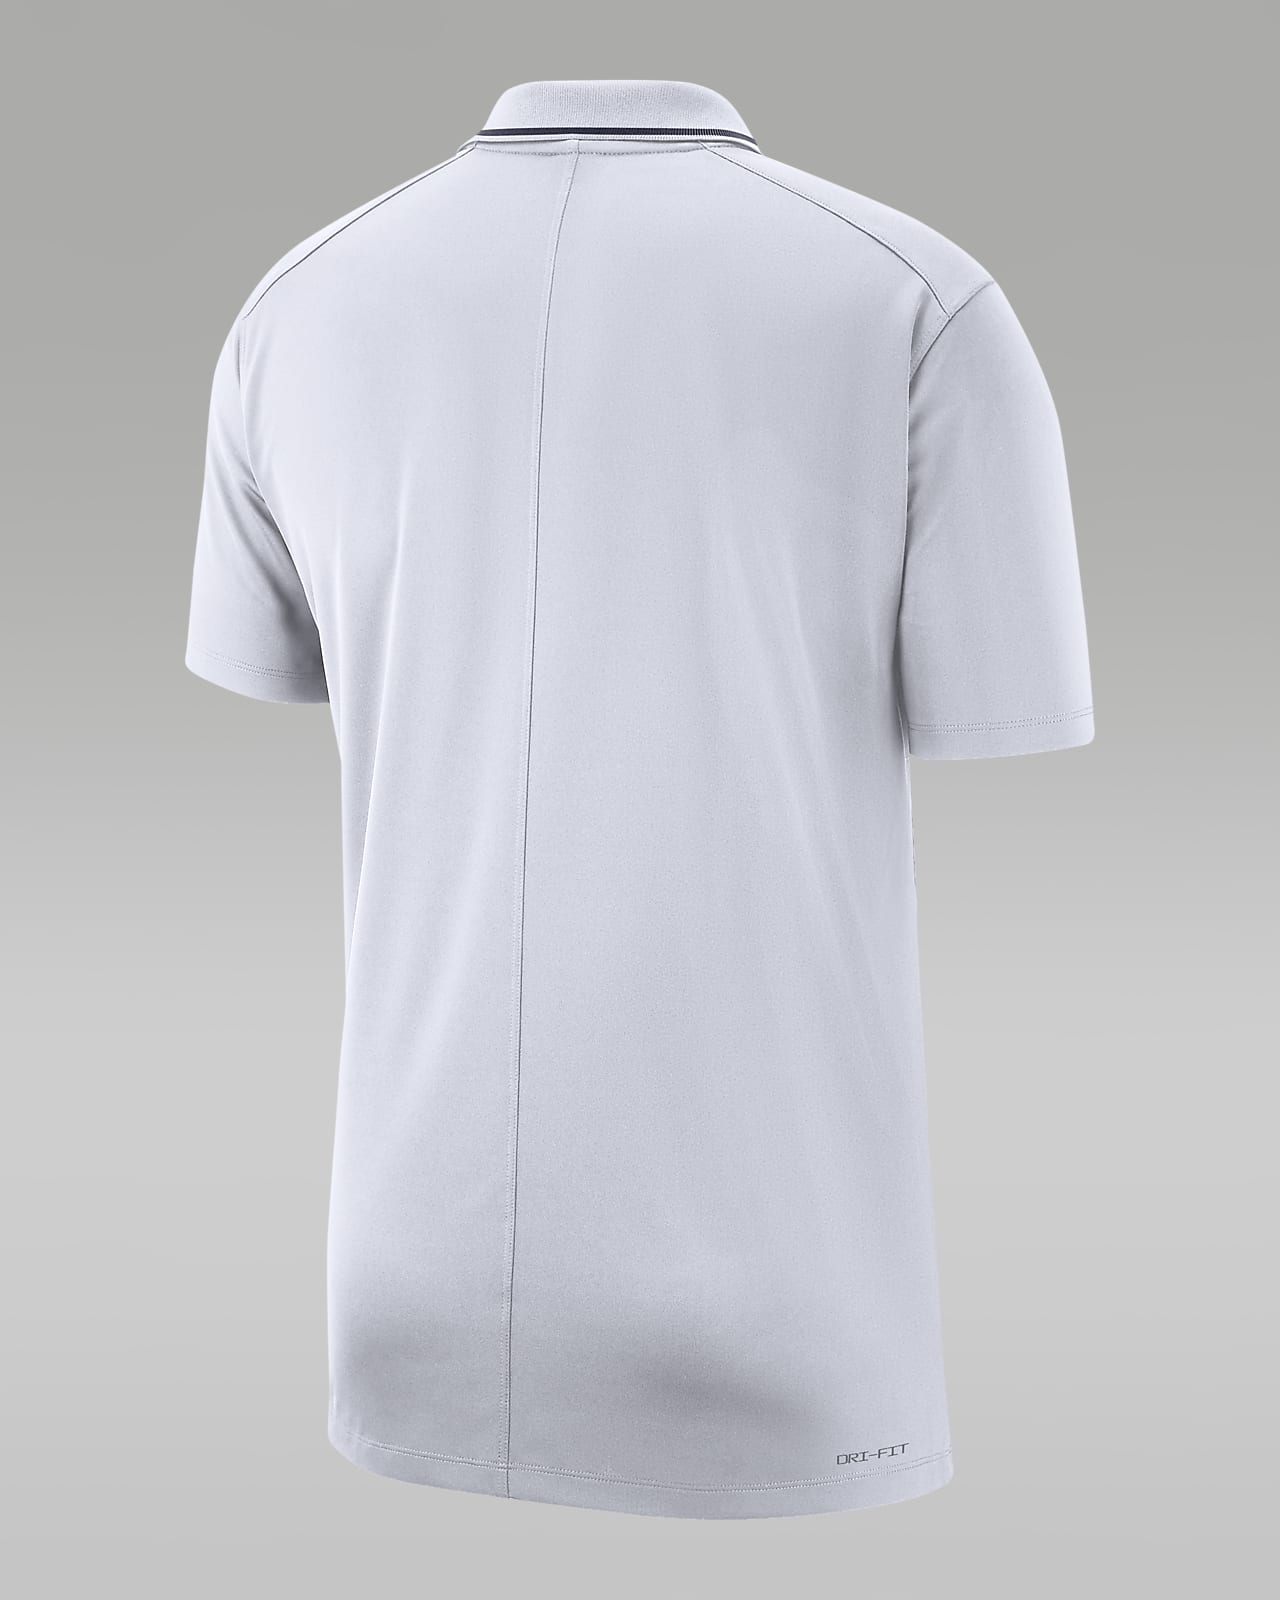 Jordan College (UNC) Limited Camiseta de baloncesto - Hombre. Nike ES